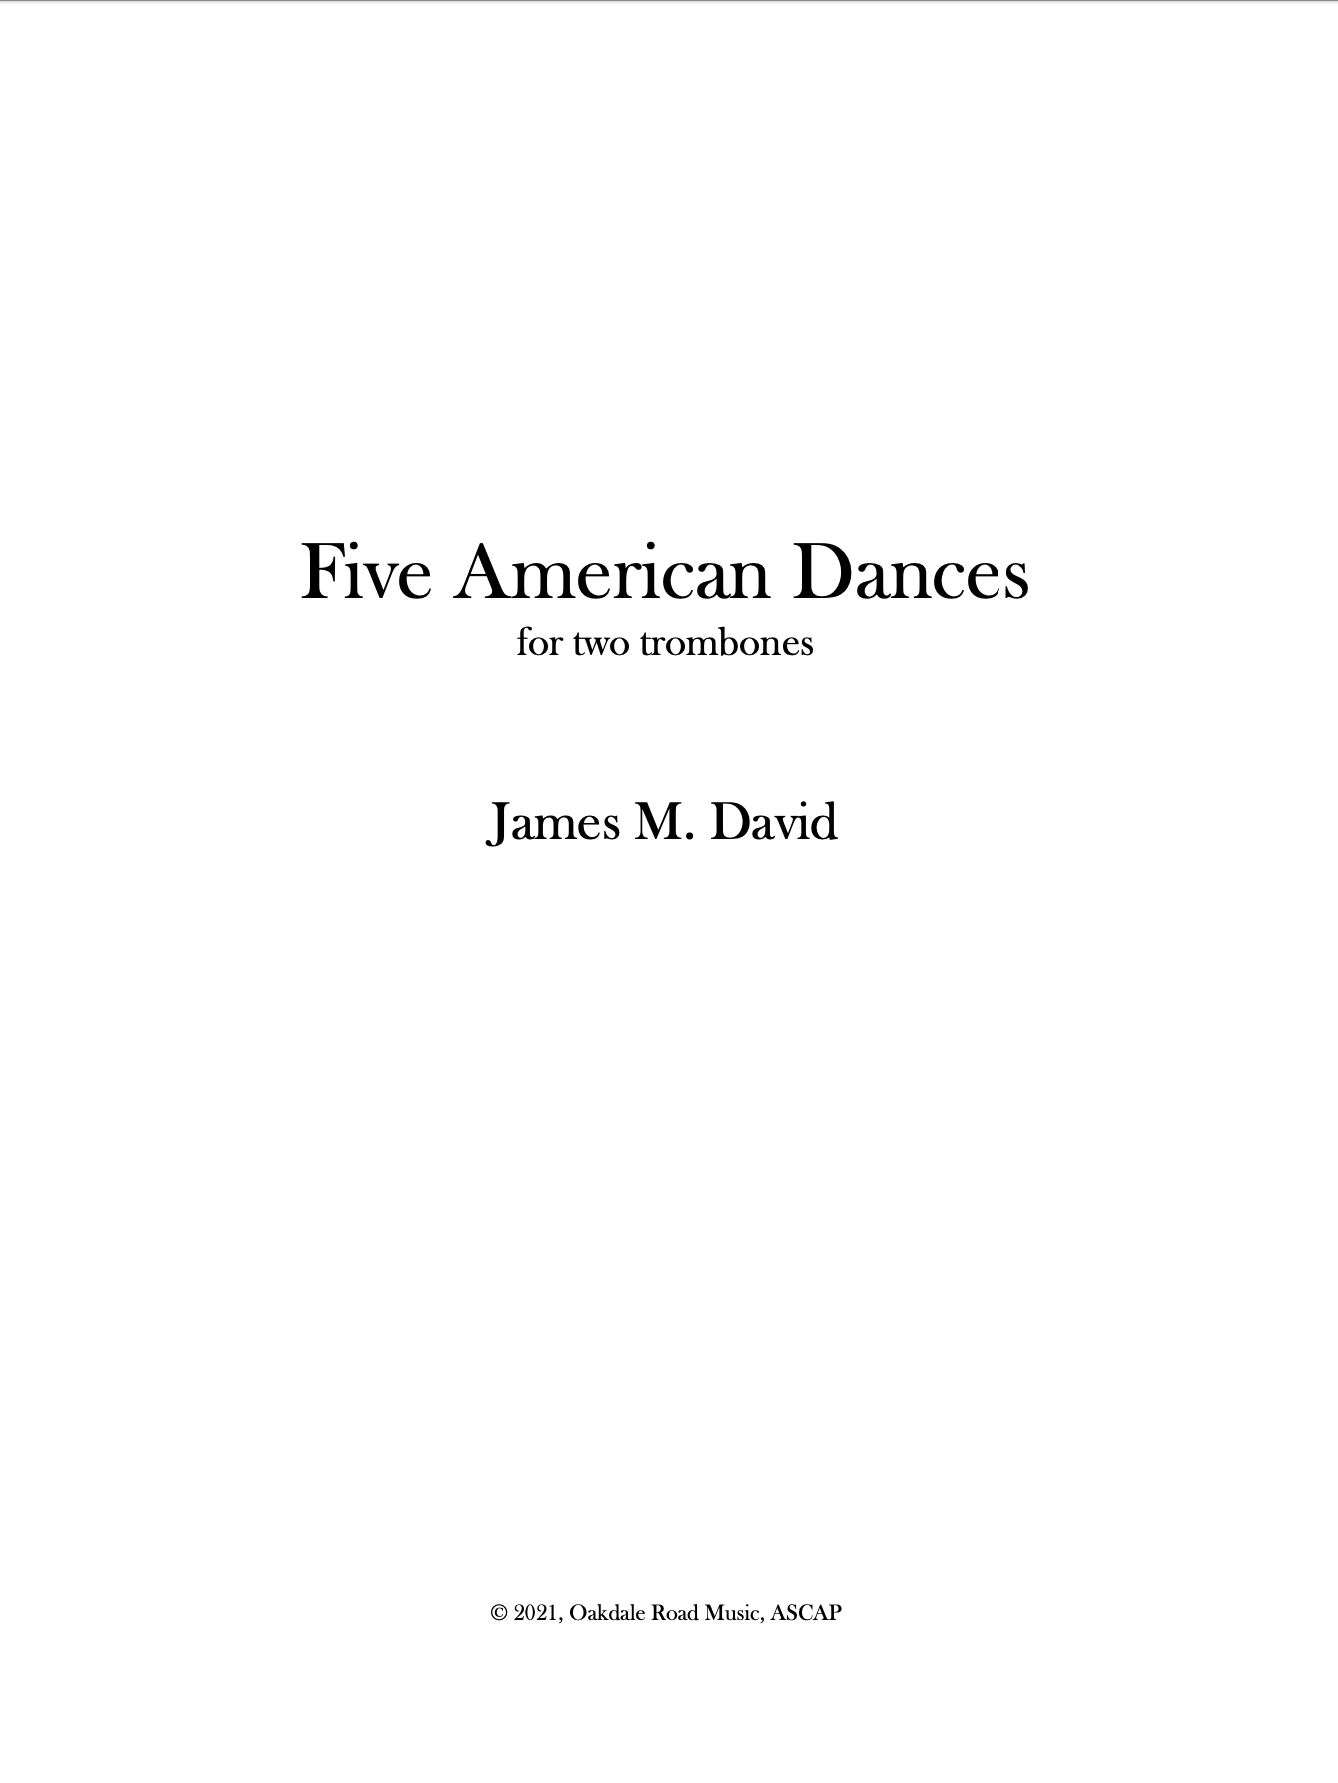 Five American Dances by James David